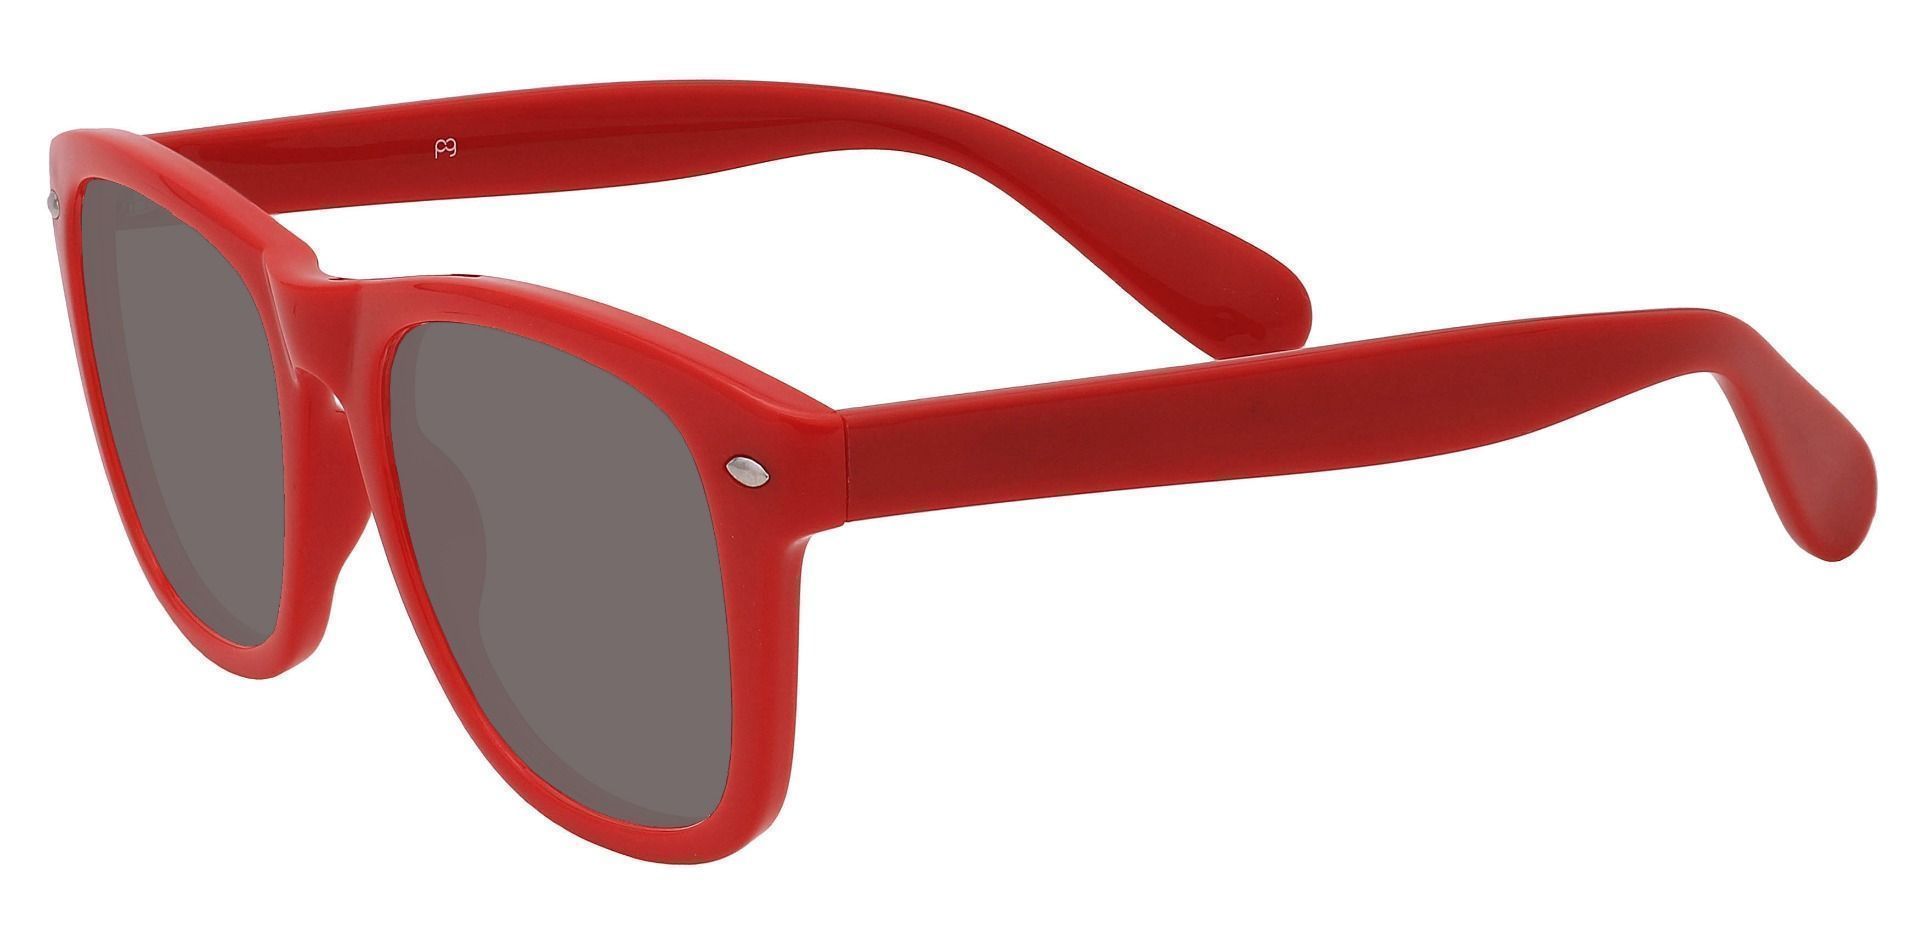 Yolanda Square Non-Rx Sunglasses - Red Frame With Gray Lenses